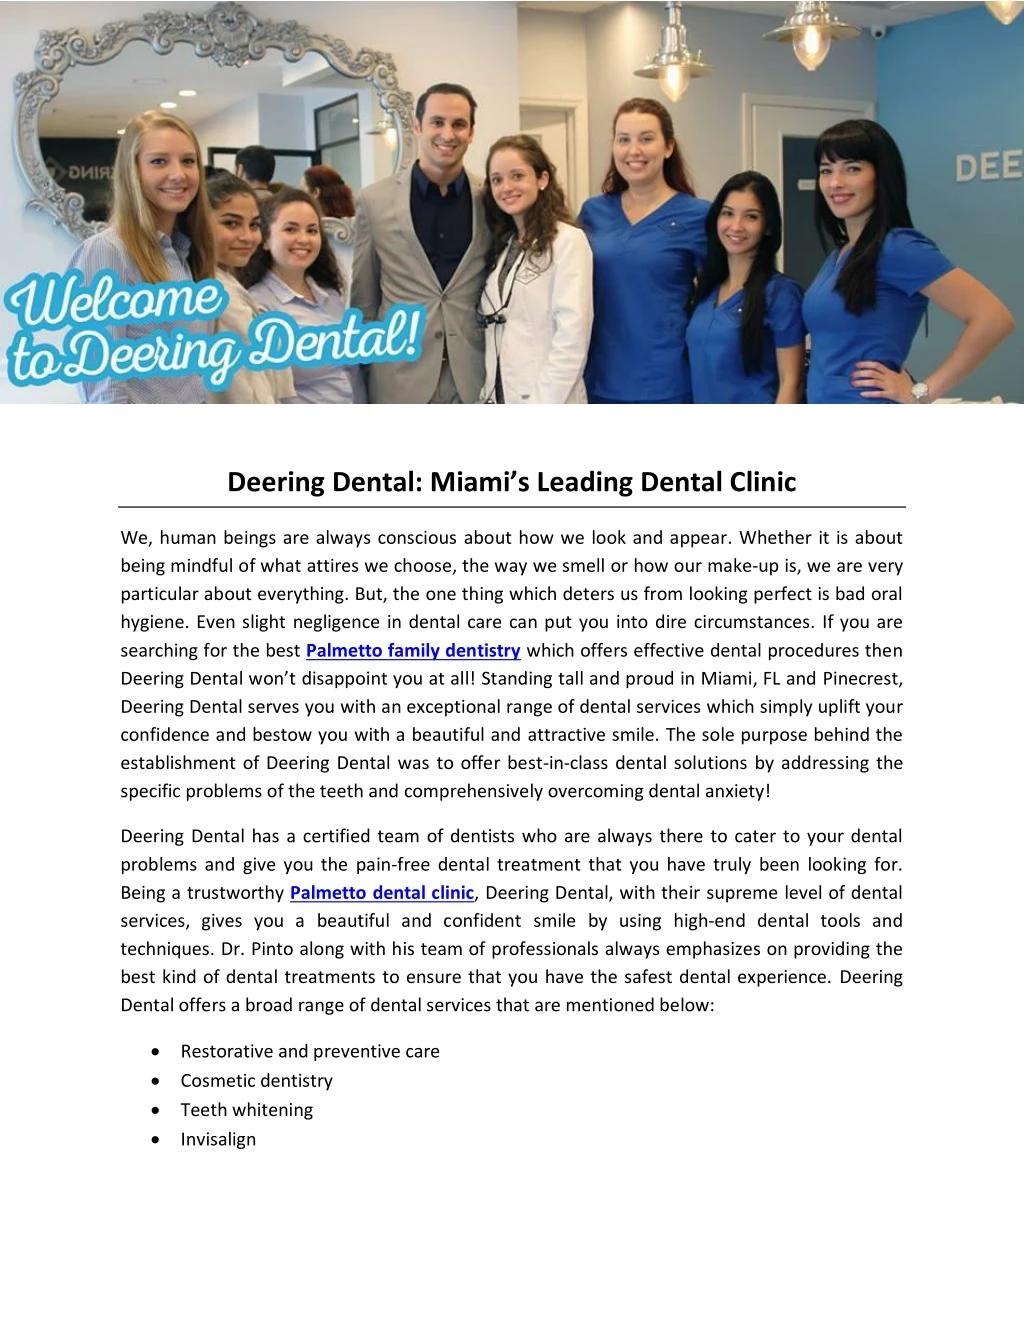 deering dental miami s leading dental clinic